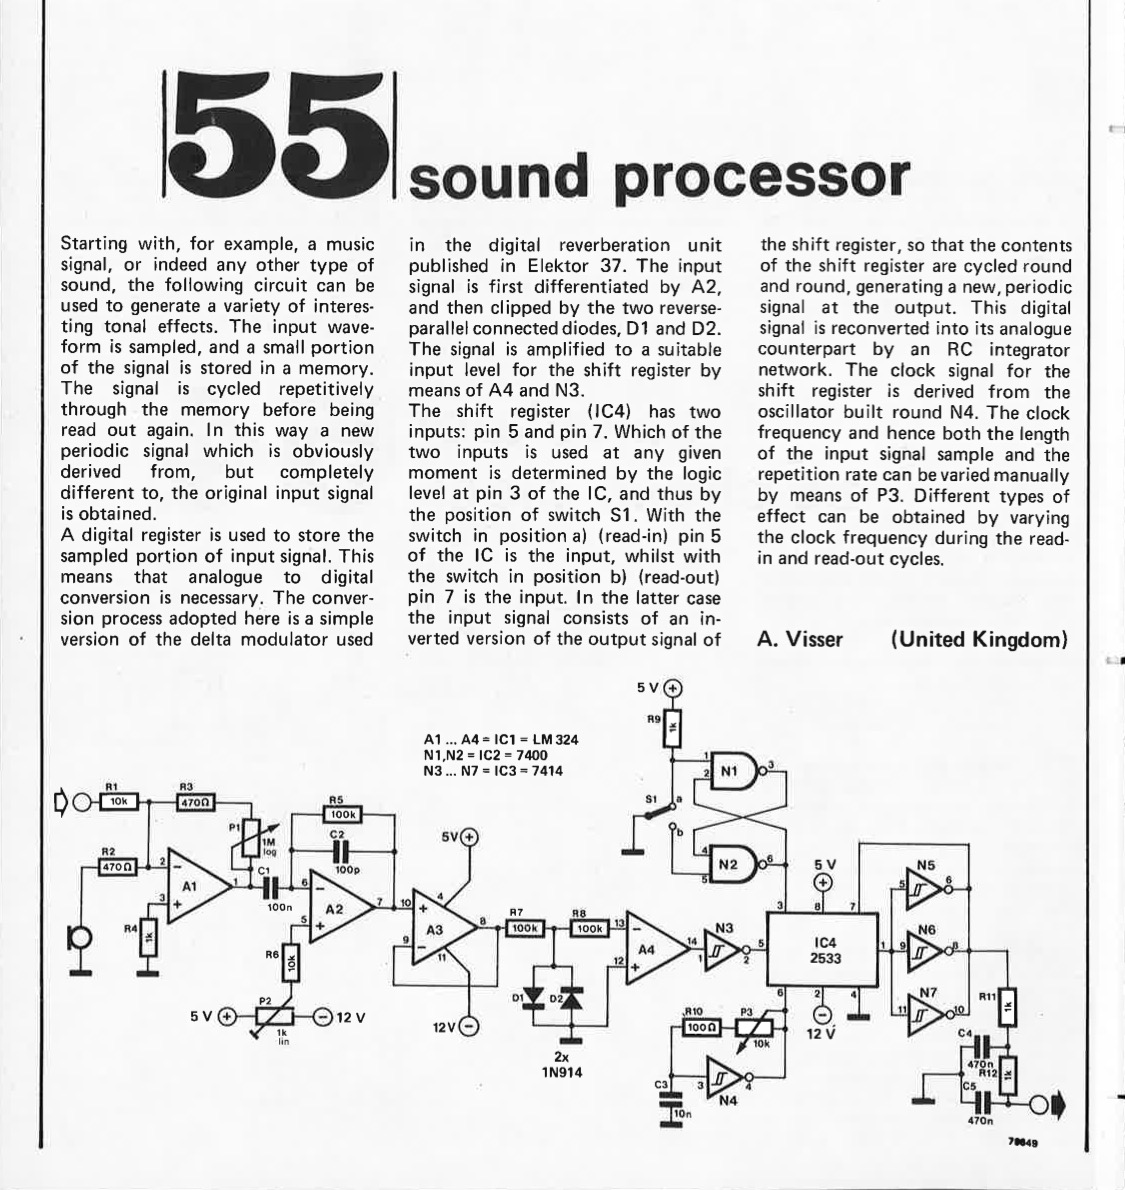 sound processor